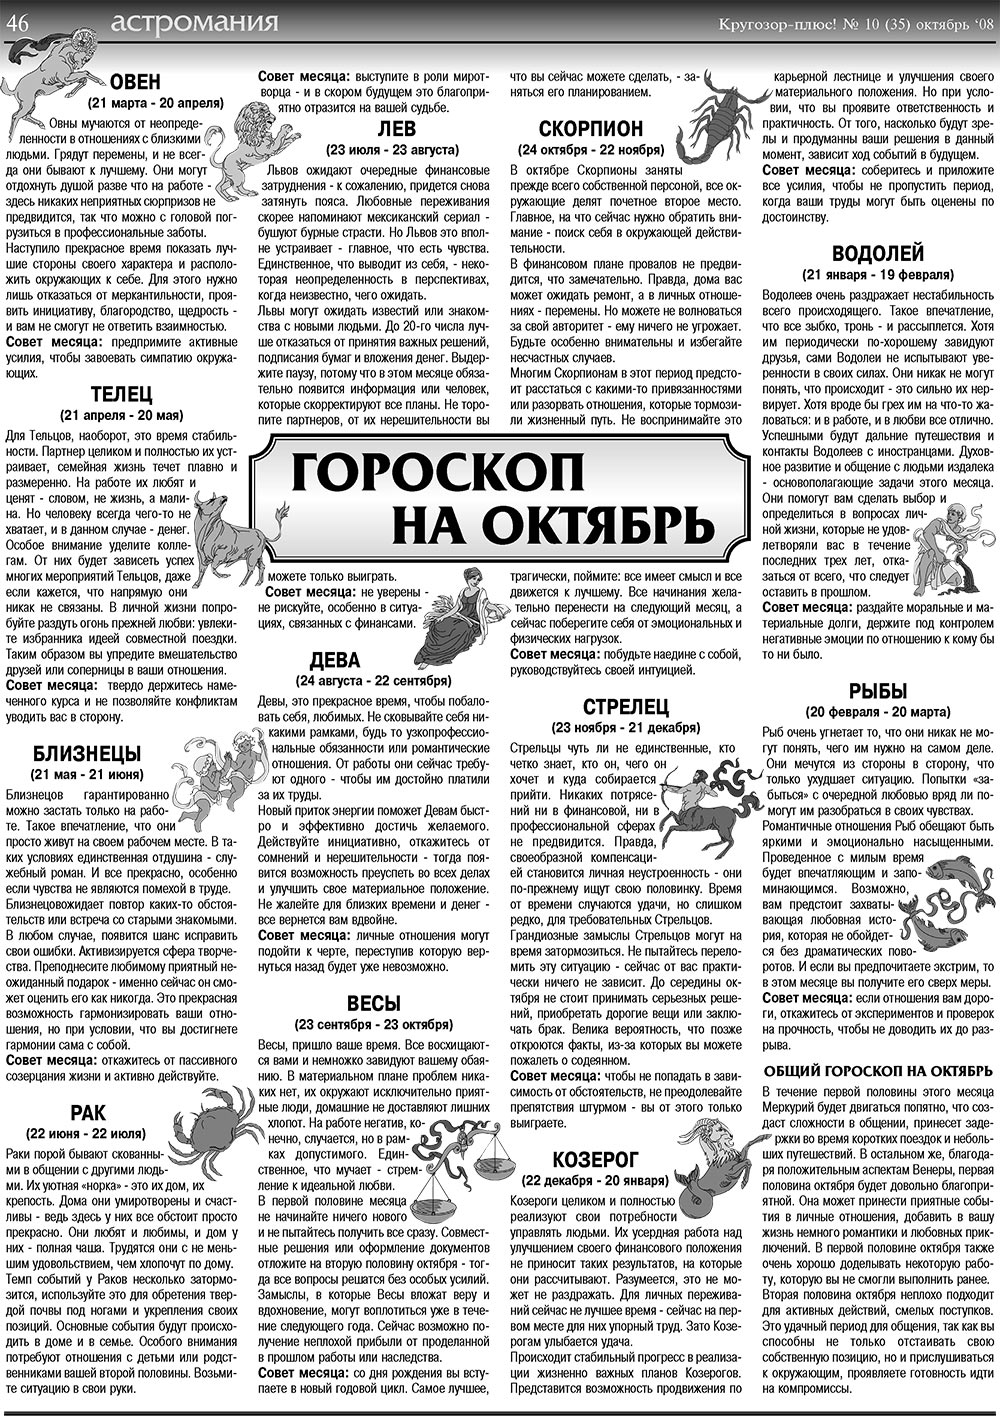 Кругозор плюс! (газета). 2008 год, номер 10, стр. 46